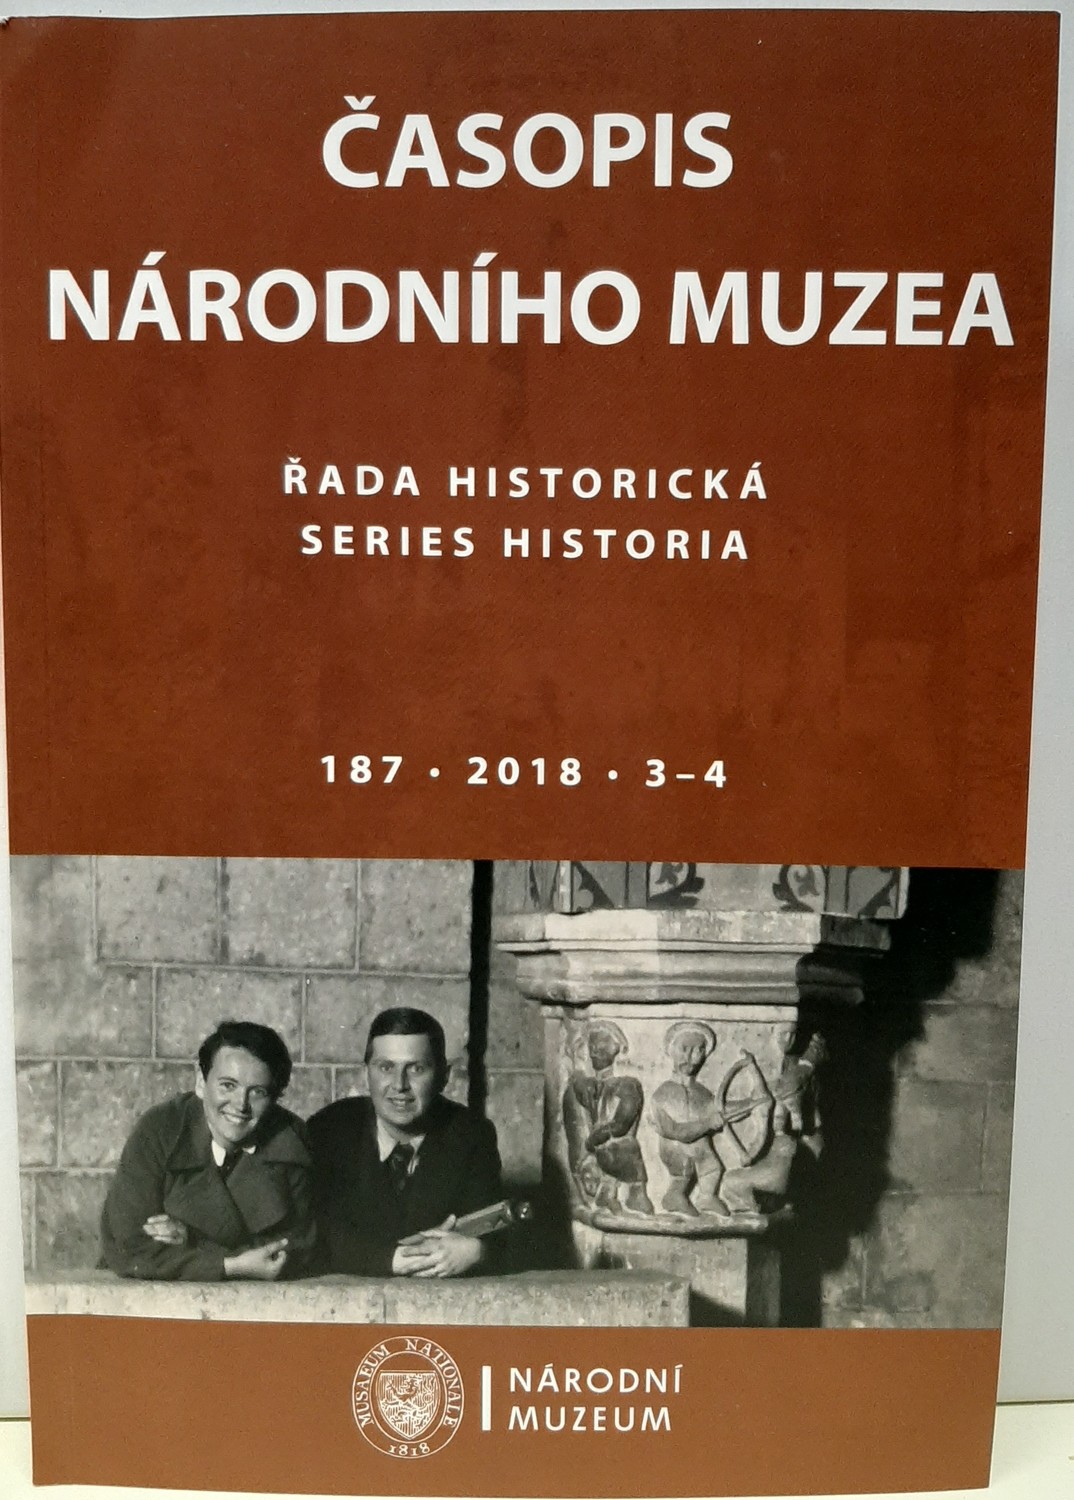 Casopis Národního muzea. Rada historická 2018/187. évf. 3-4. sz. (Rippl-Rónai Múzeum CC BY-NC-ND)